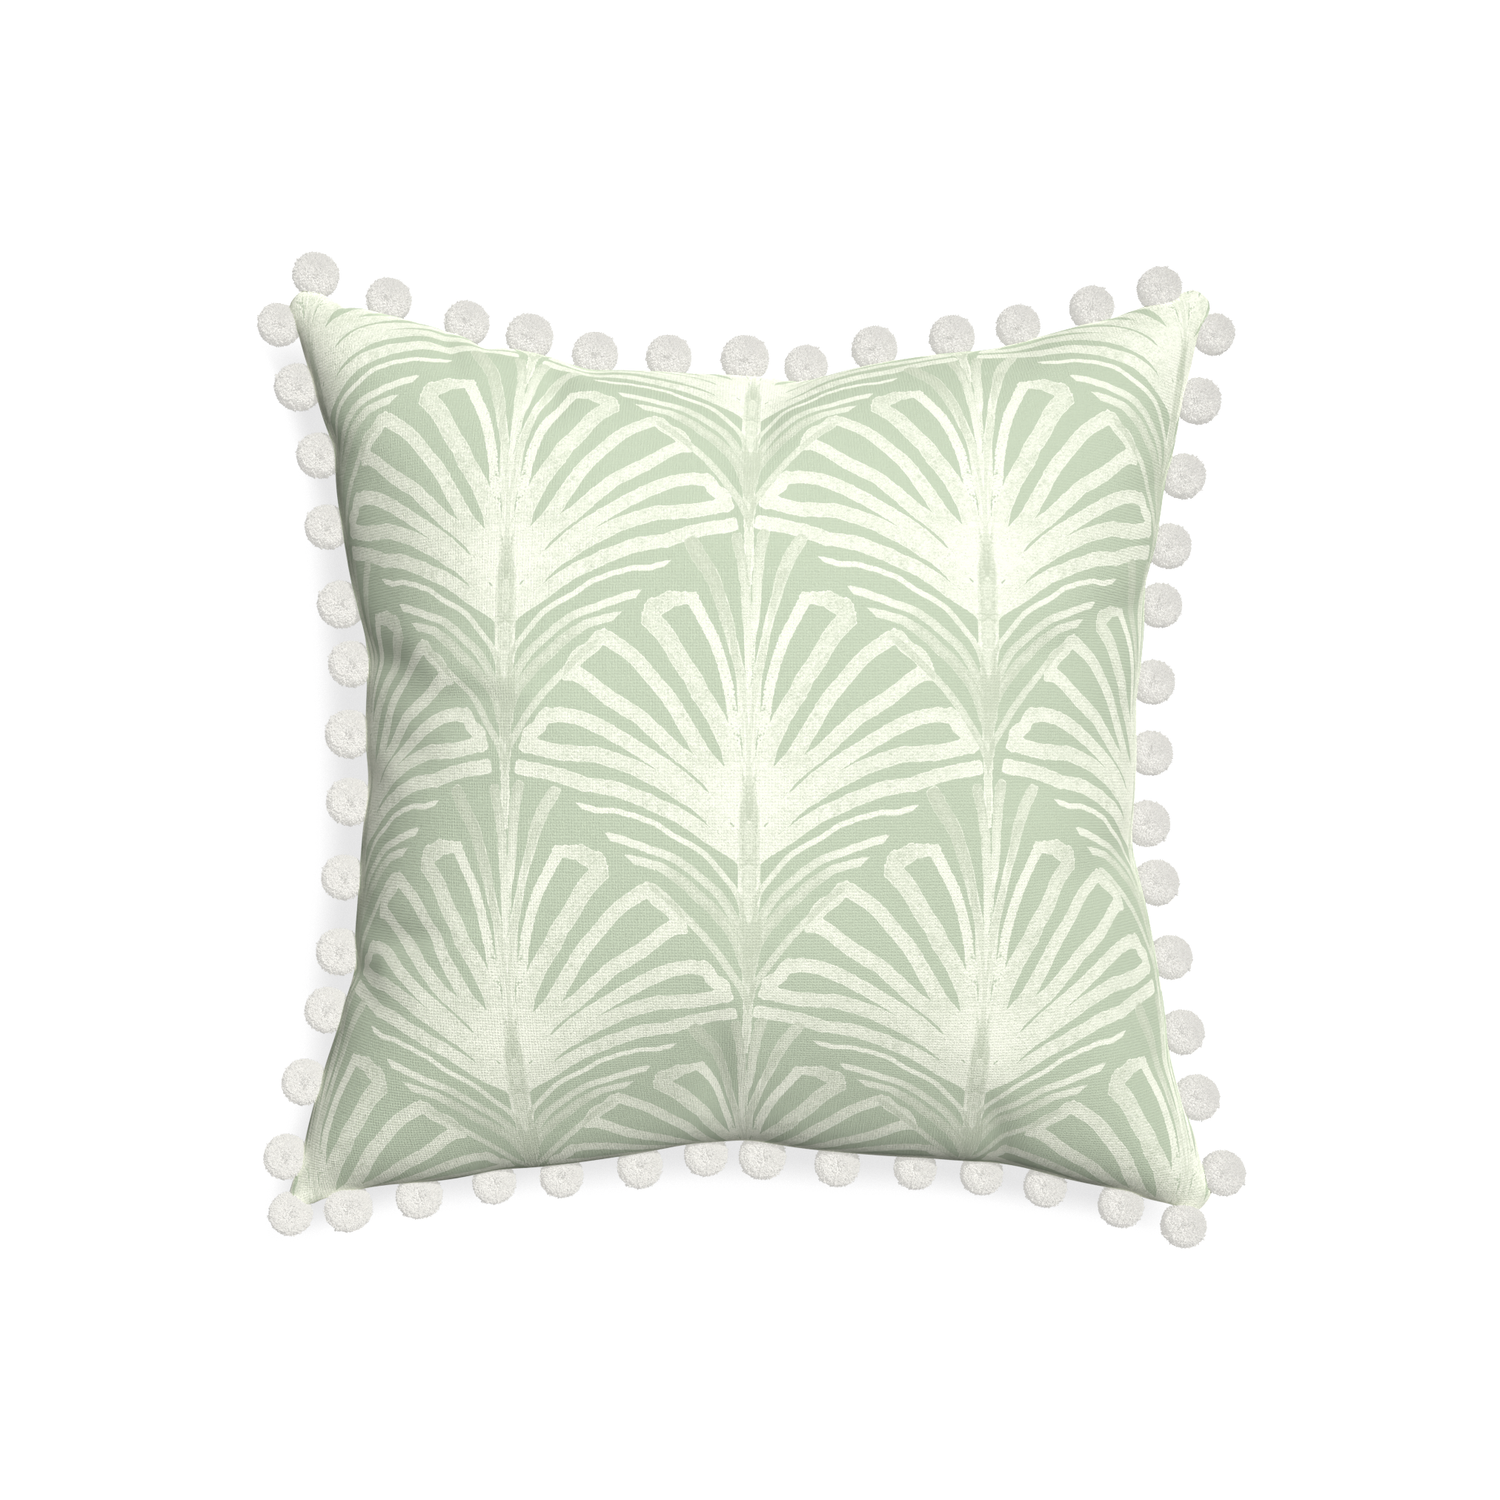 20-square suzy sage custom pillow with snow pom pom on white background